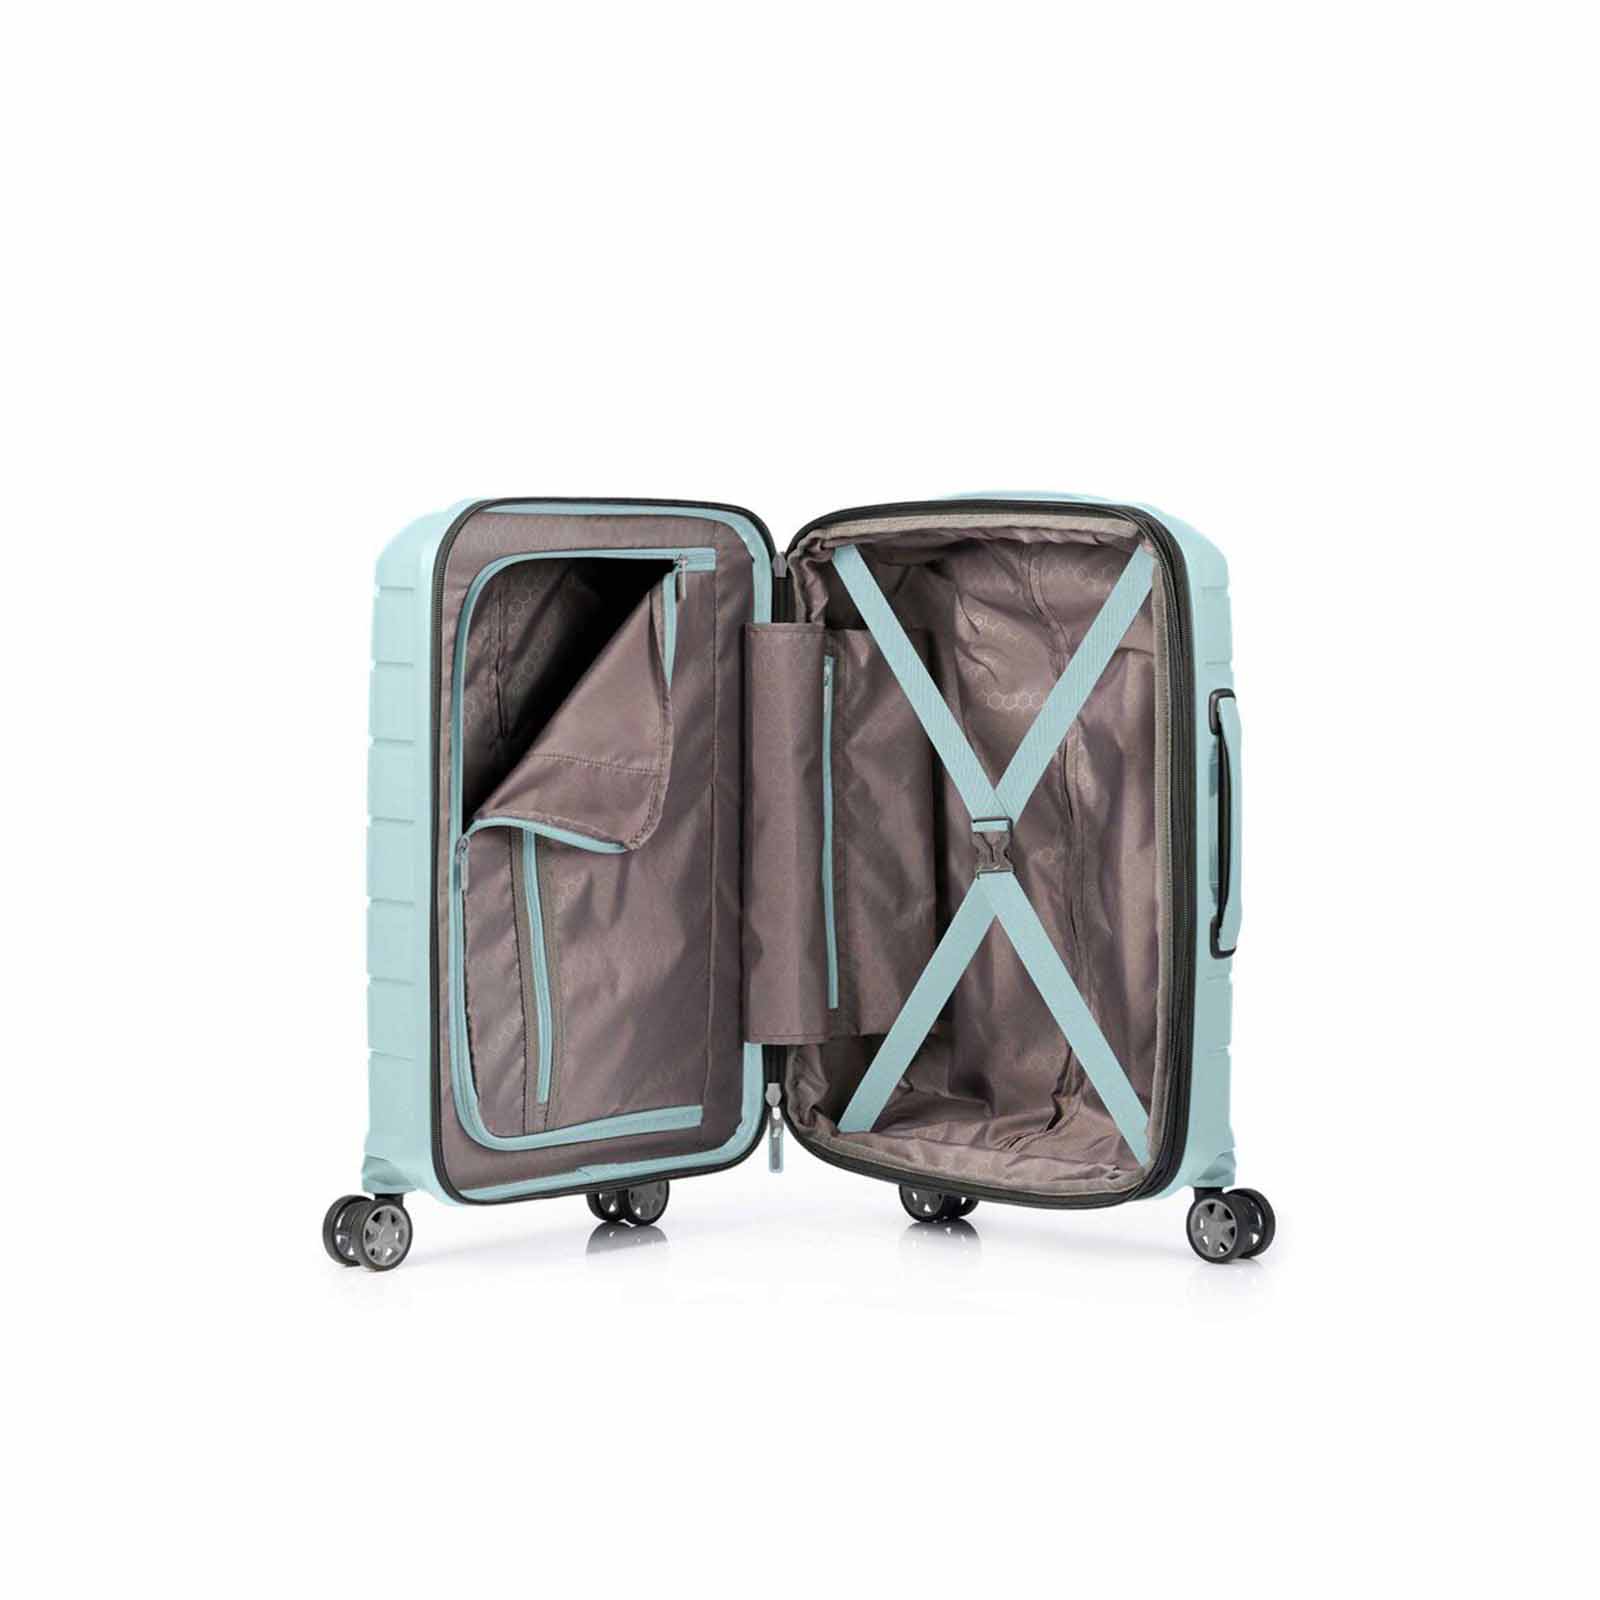 Samsonite-Oc2lite-55cm-Carry-On-Suitcase-Lagoon-Blue-Open